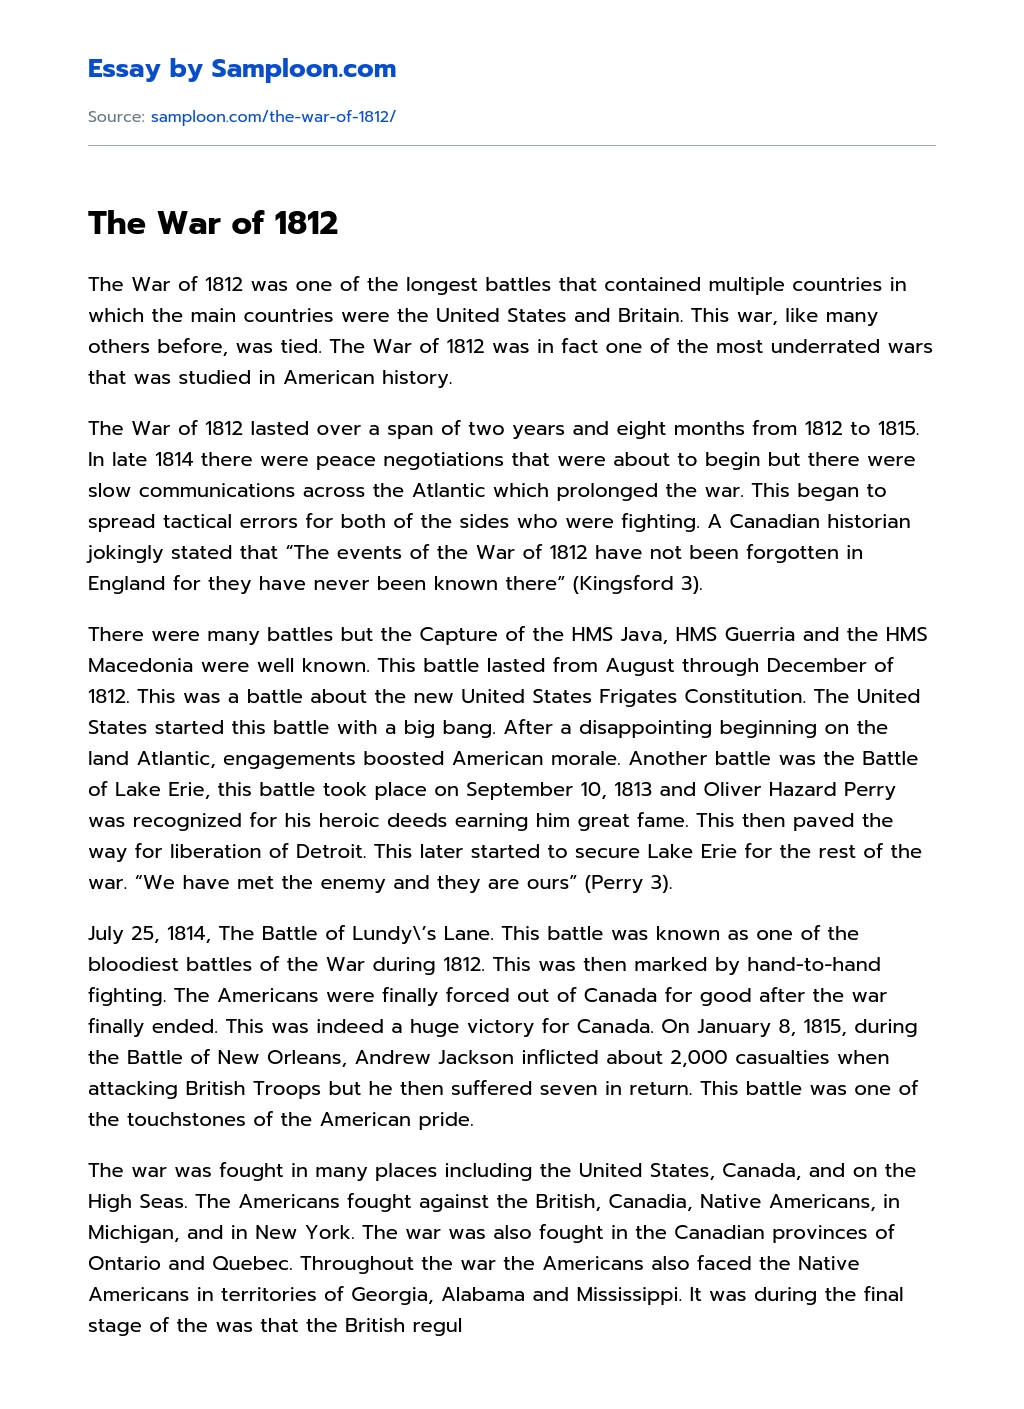 The War of 1812 essay